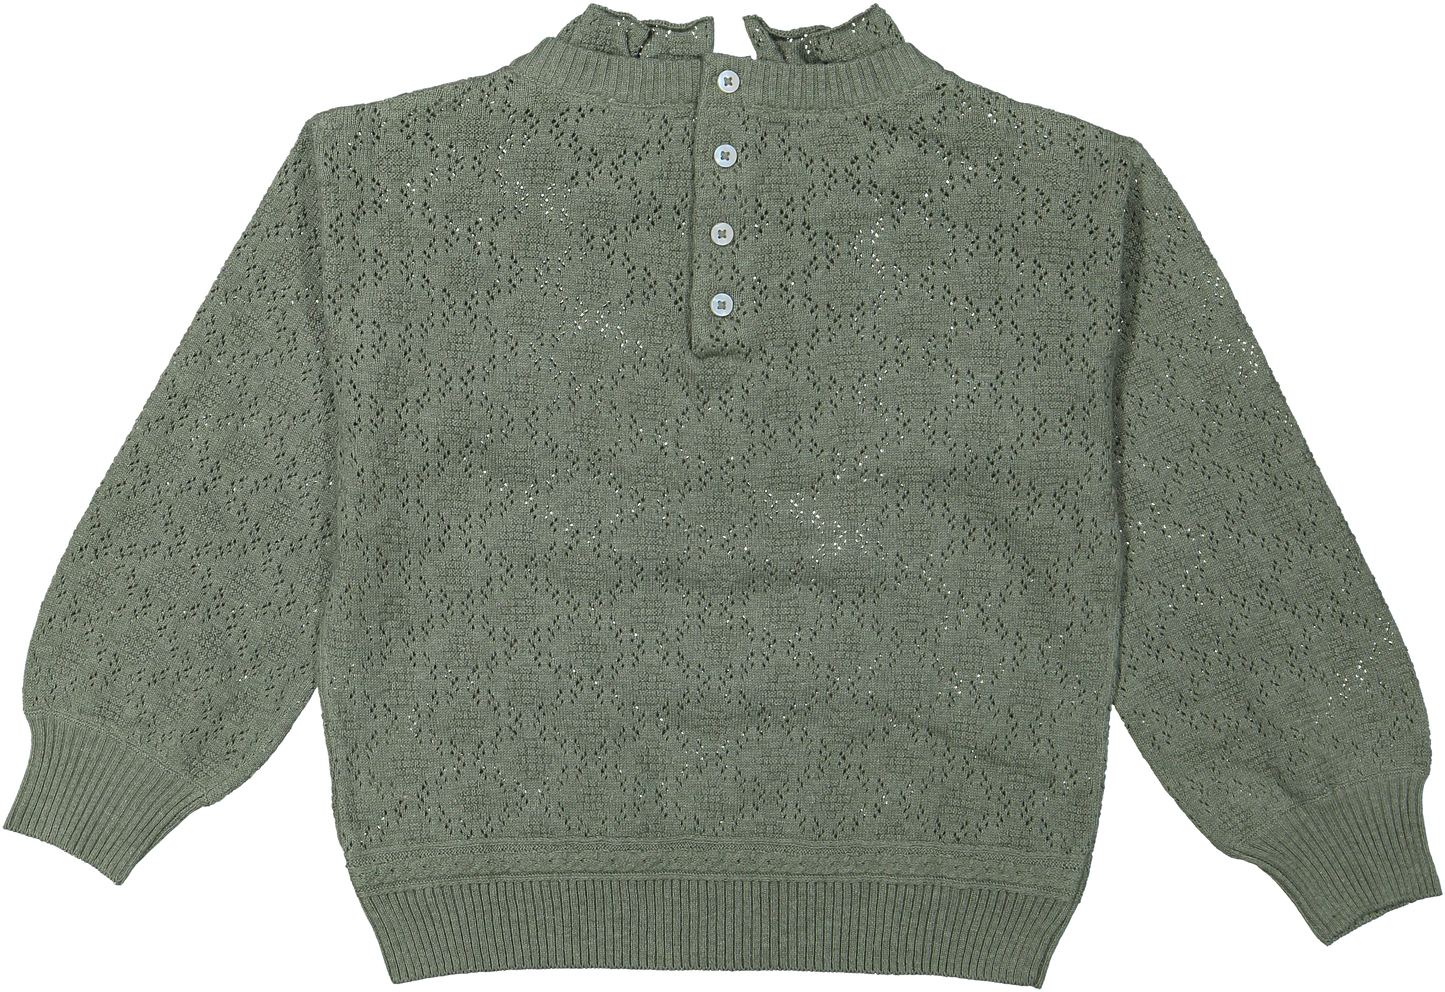 Jude sweater